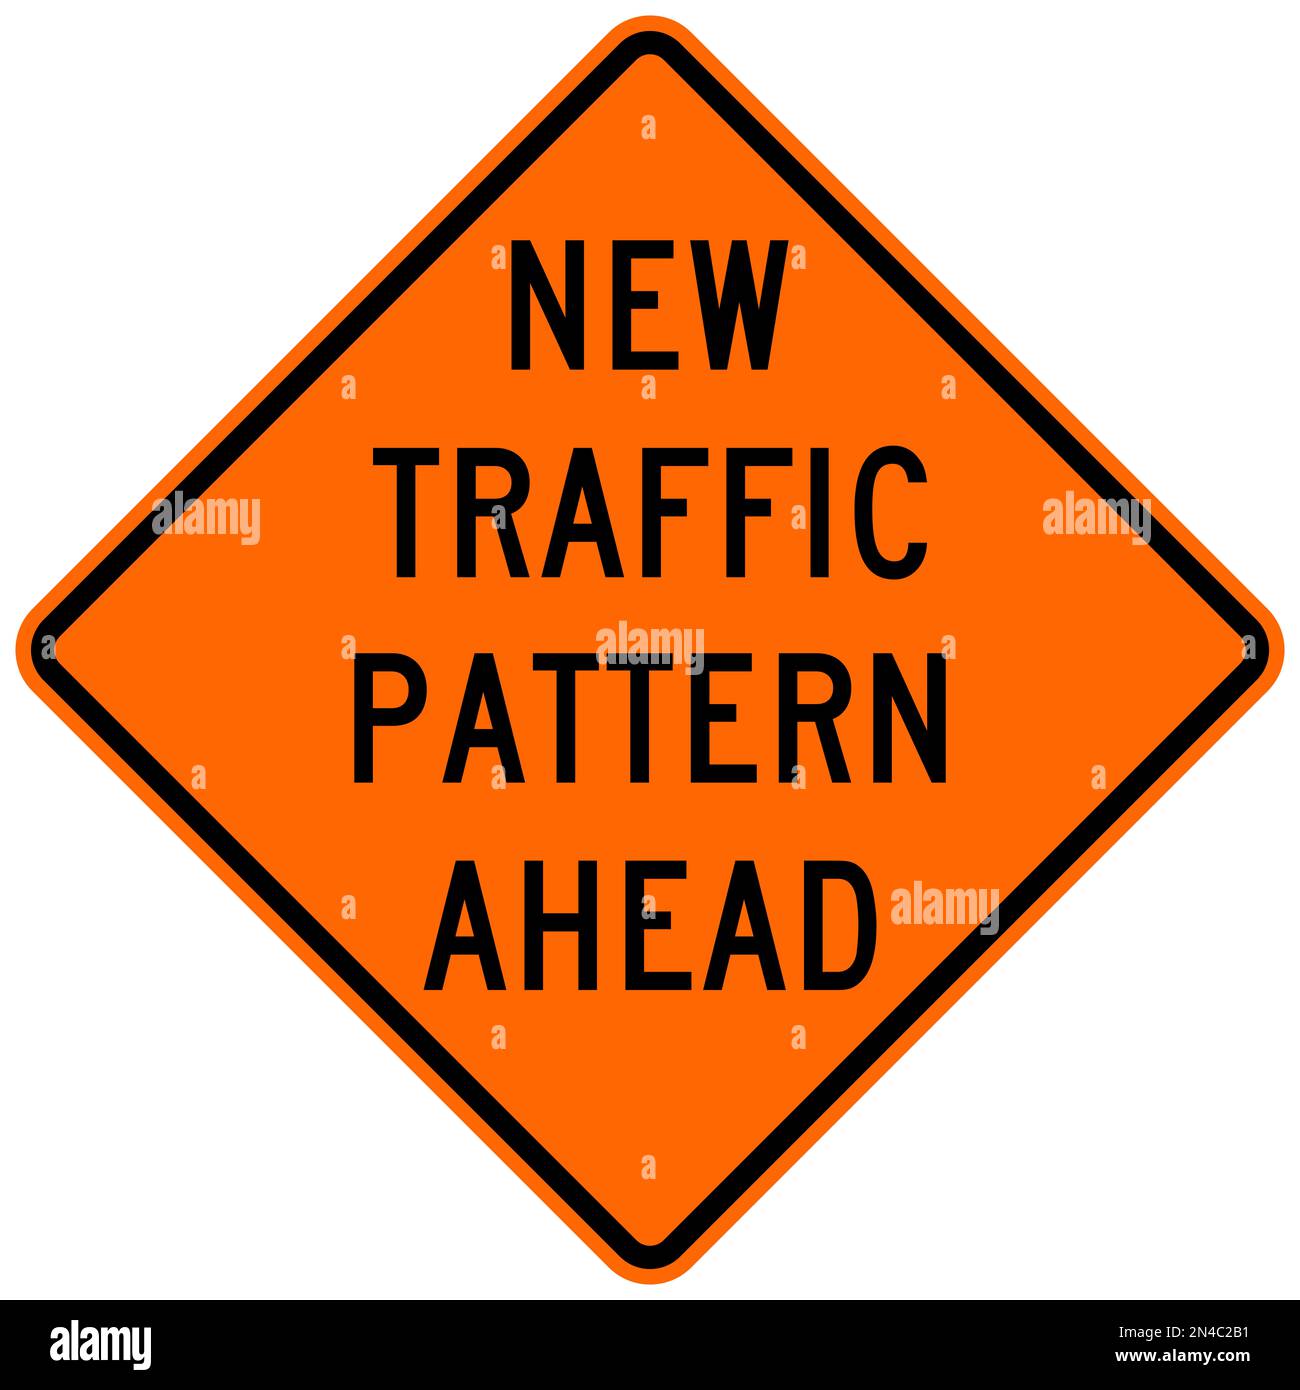 New traffic pattern ahead warning sign Stock Photo